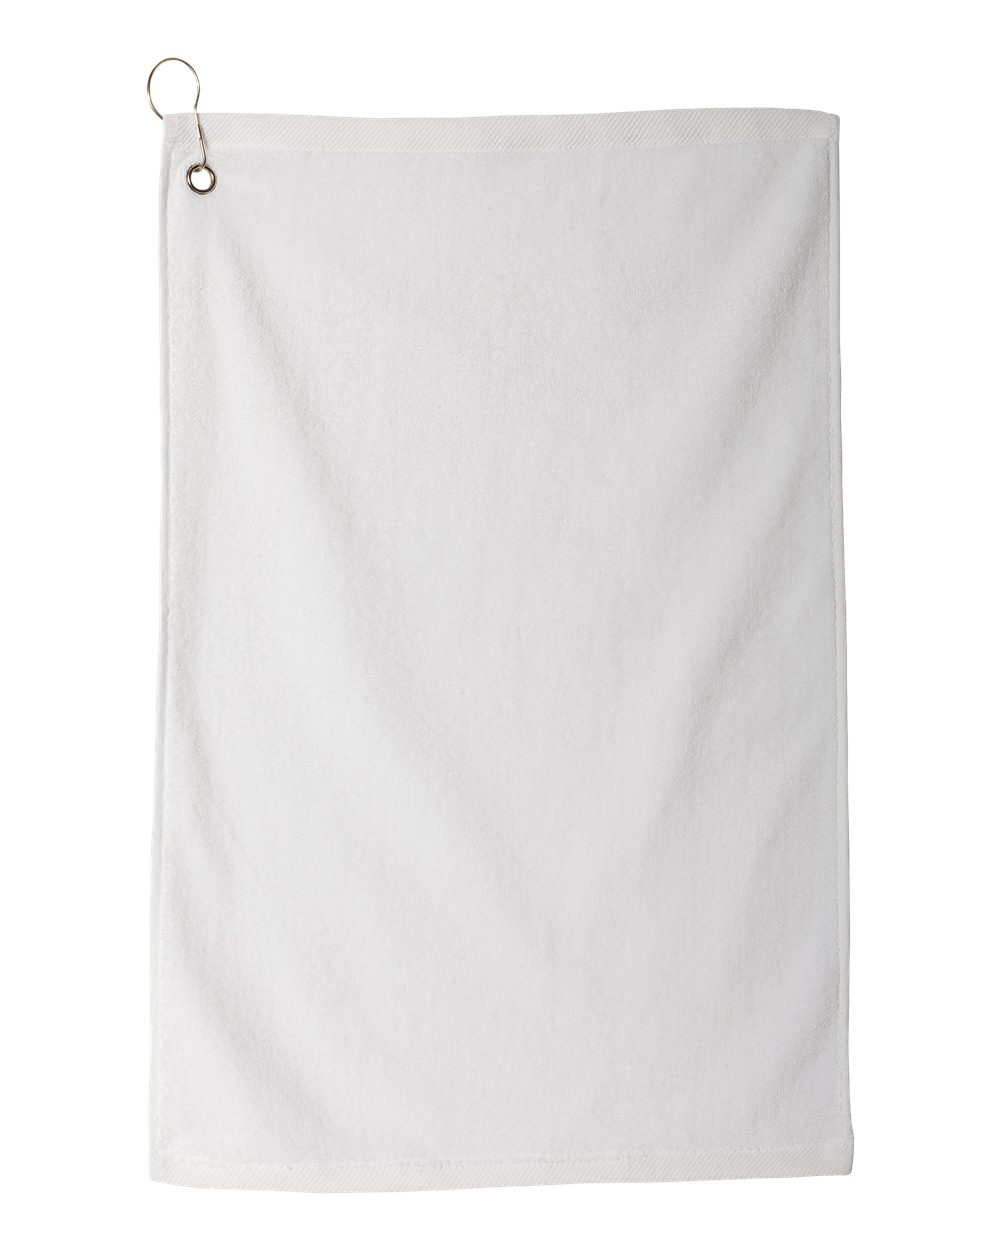 Carmel Towel Company Microfiber Golf Towel - C1518MGH